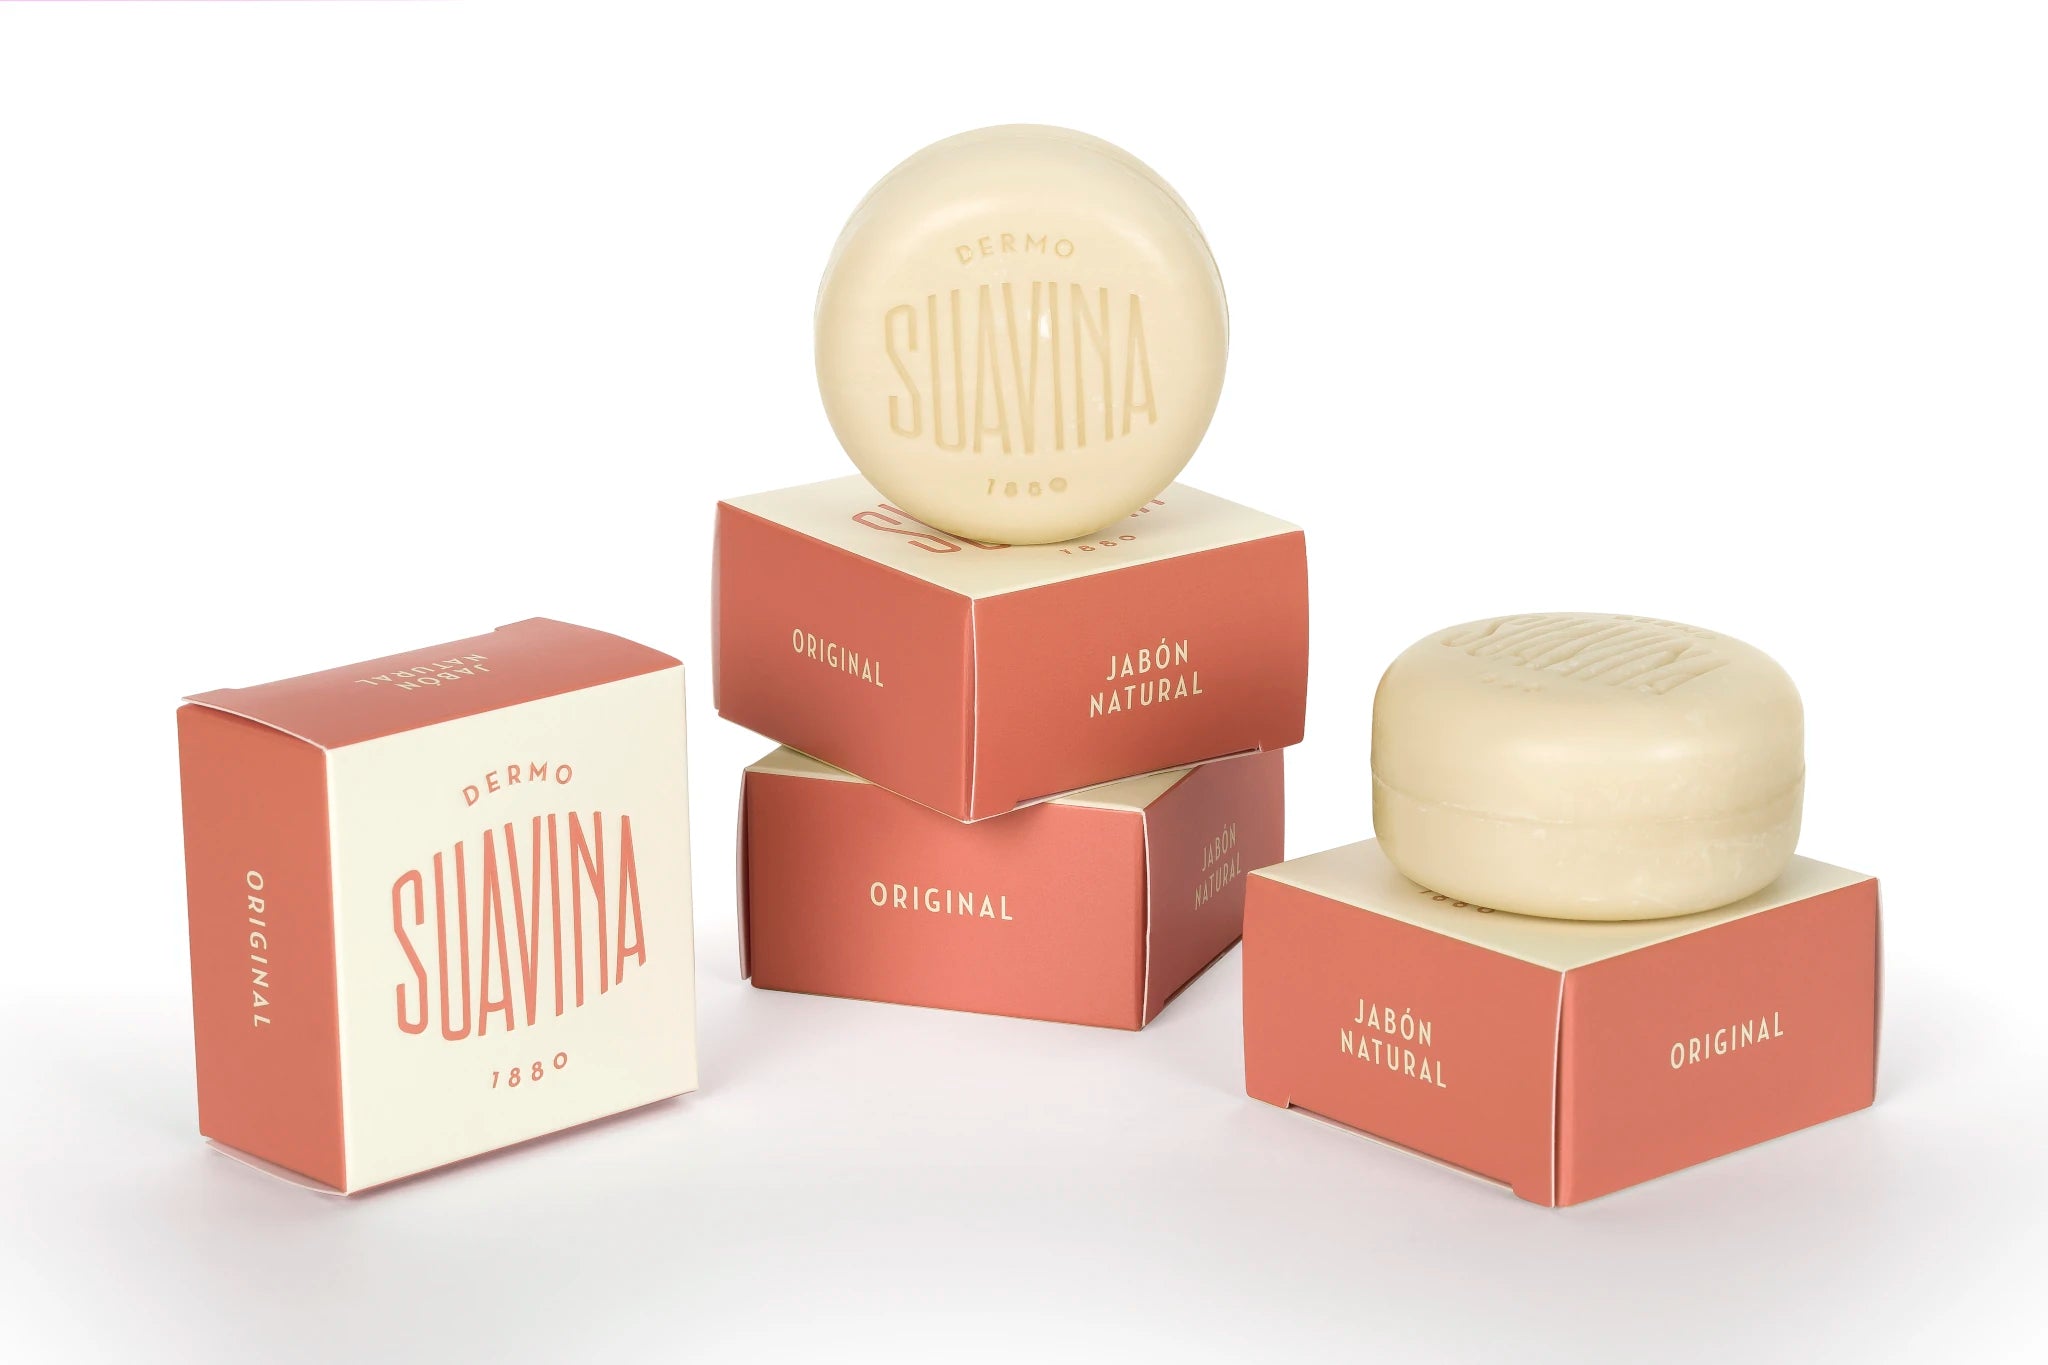 Dermo Suavina Original Soap bar and packaging at Lifestory Store Edinburgh